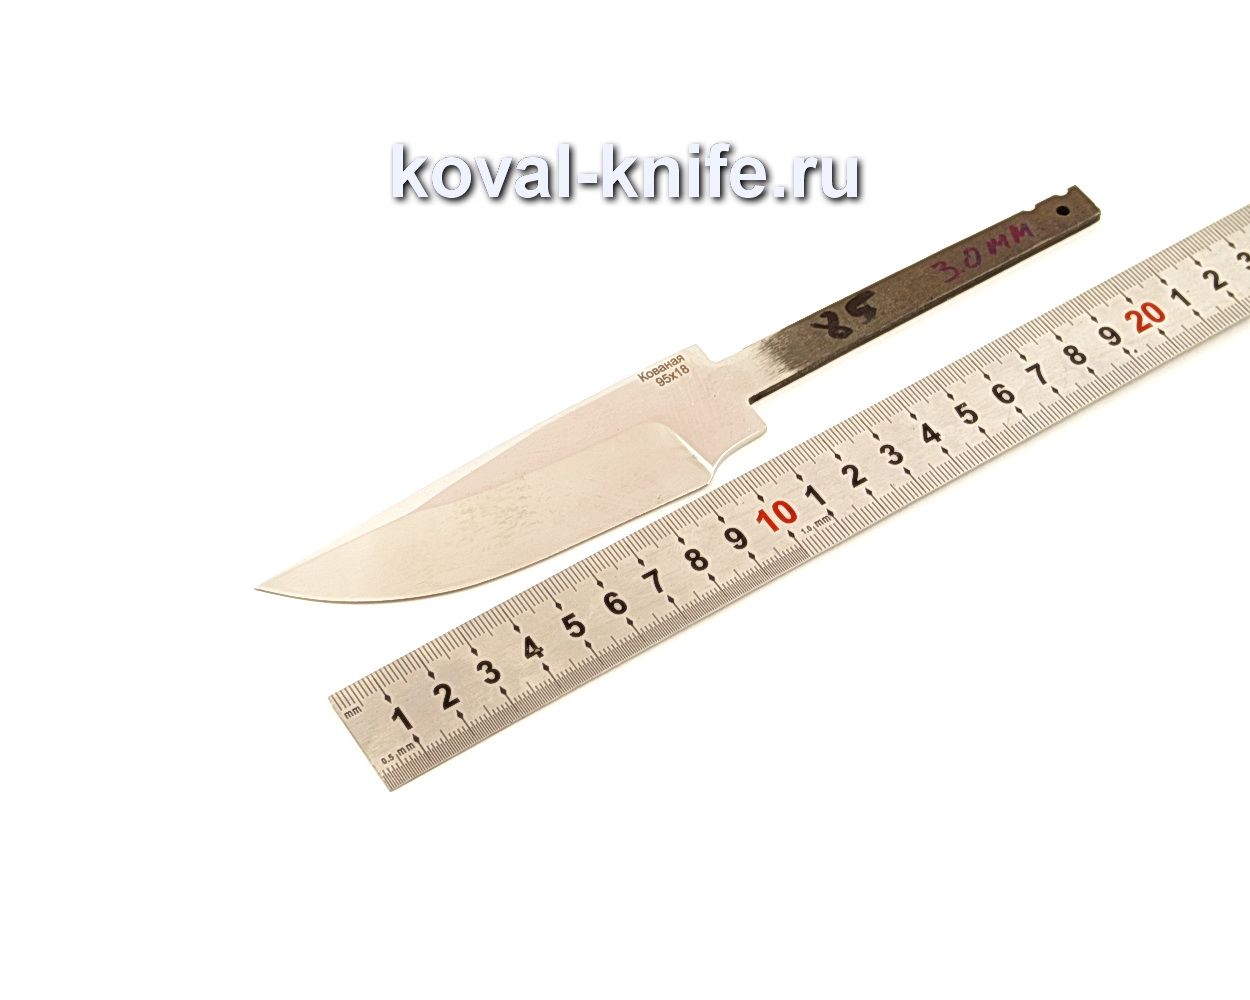 Клинок для ножа из кованой 95Х18 N85